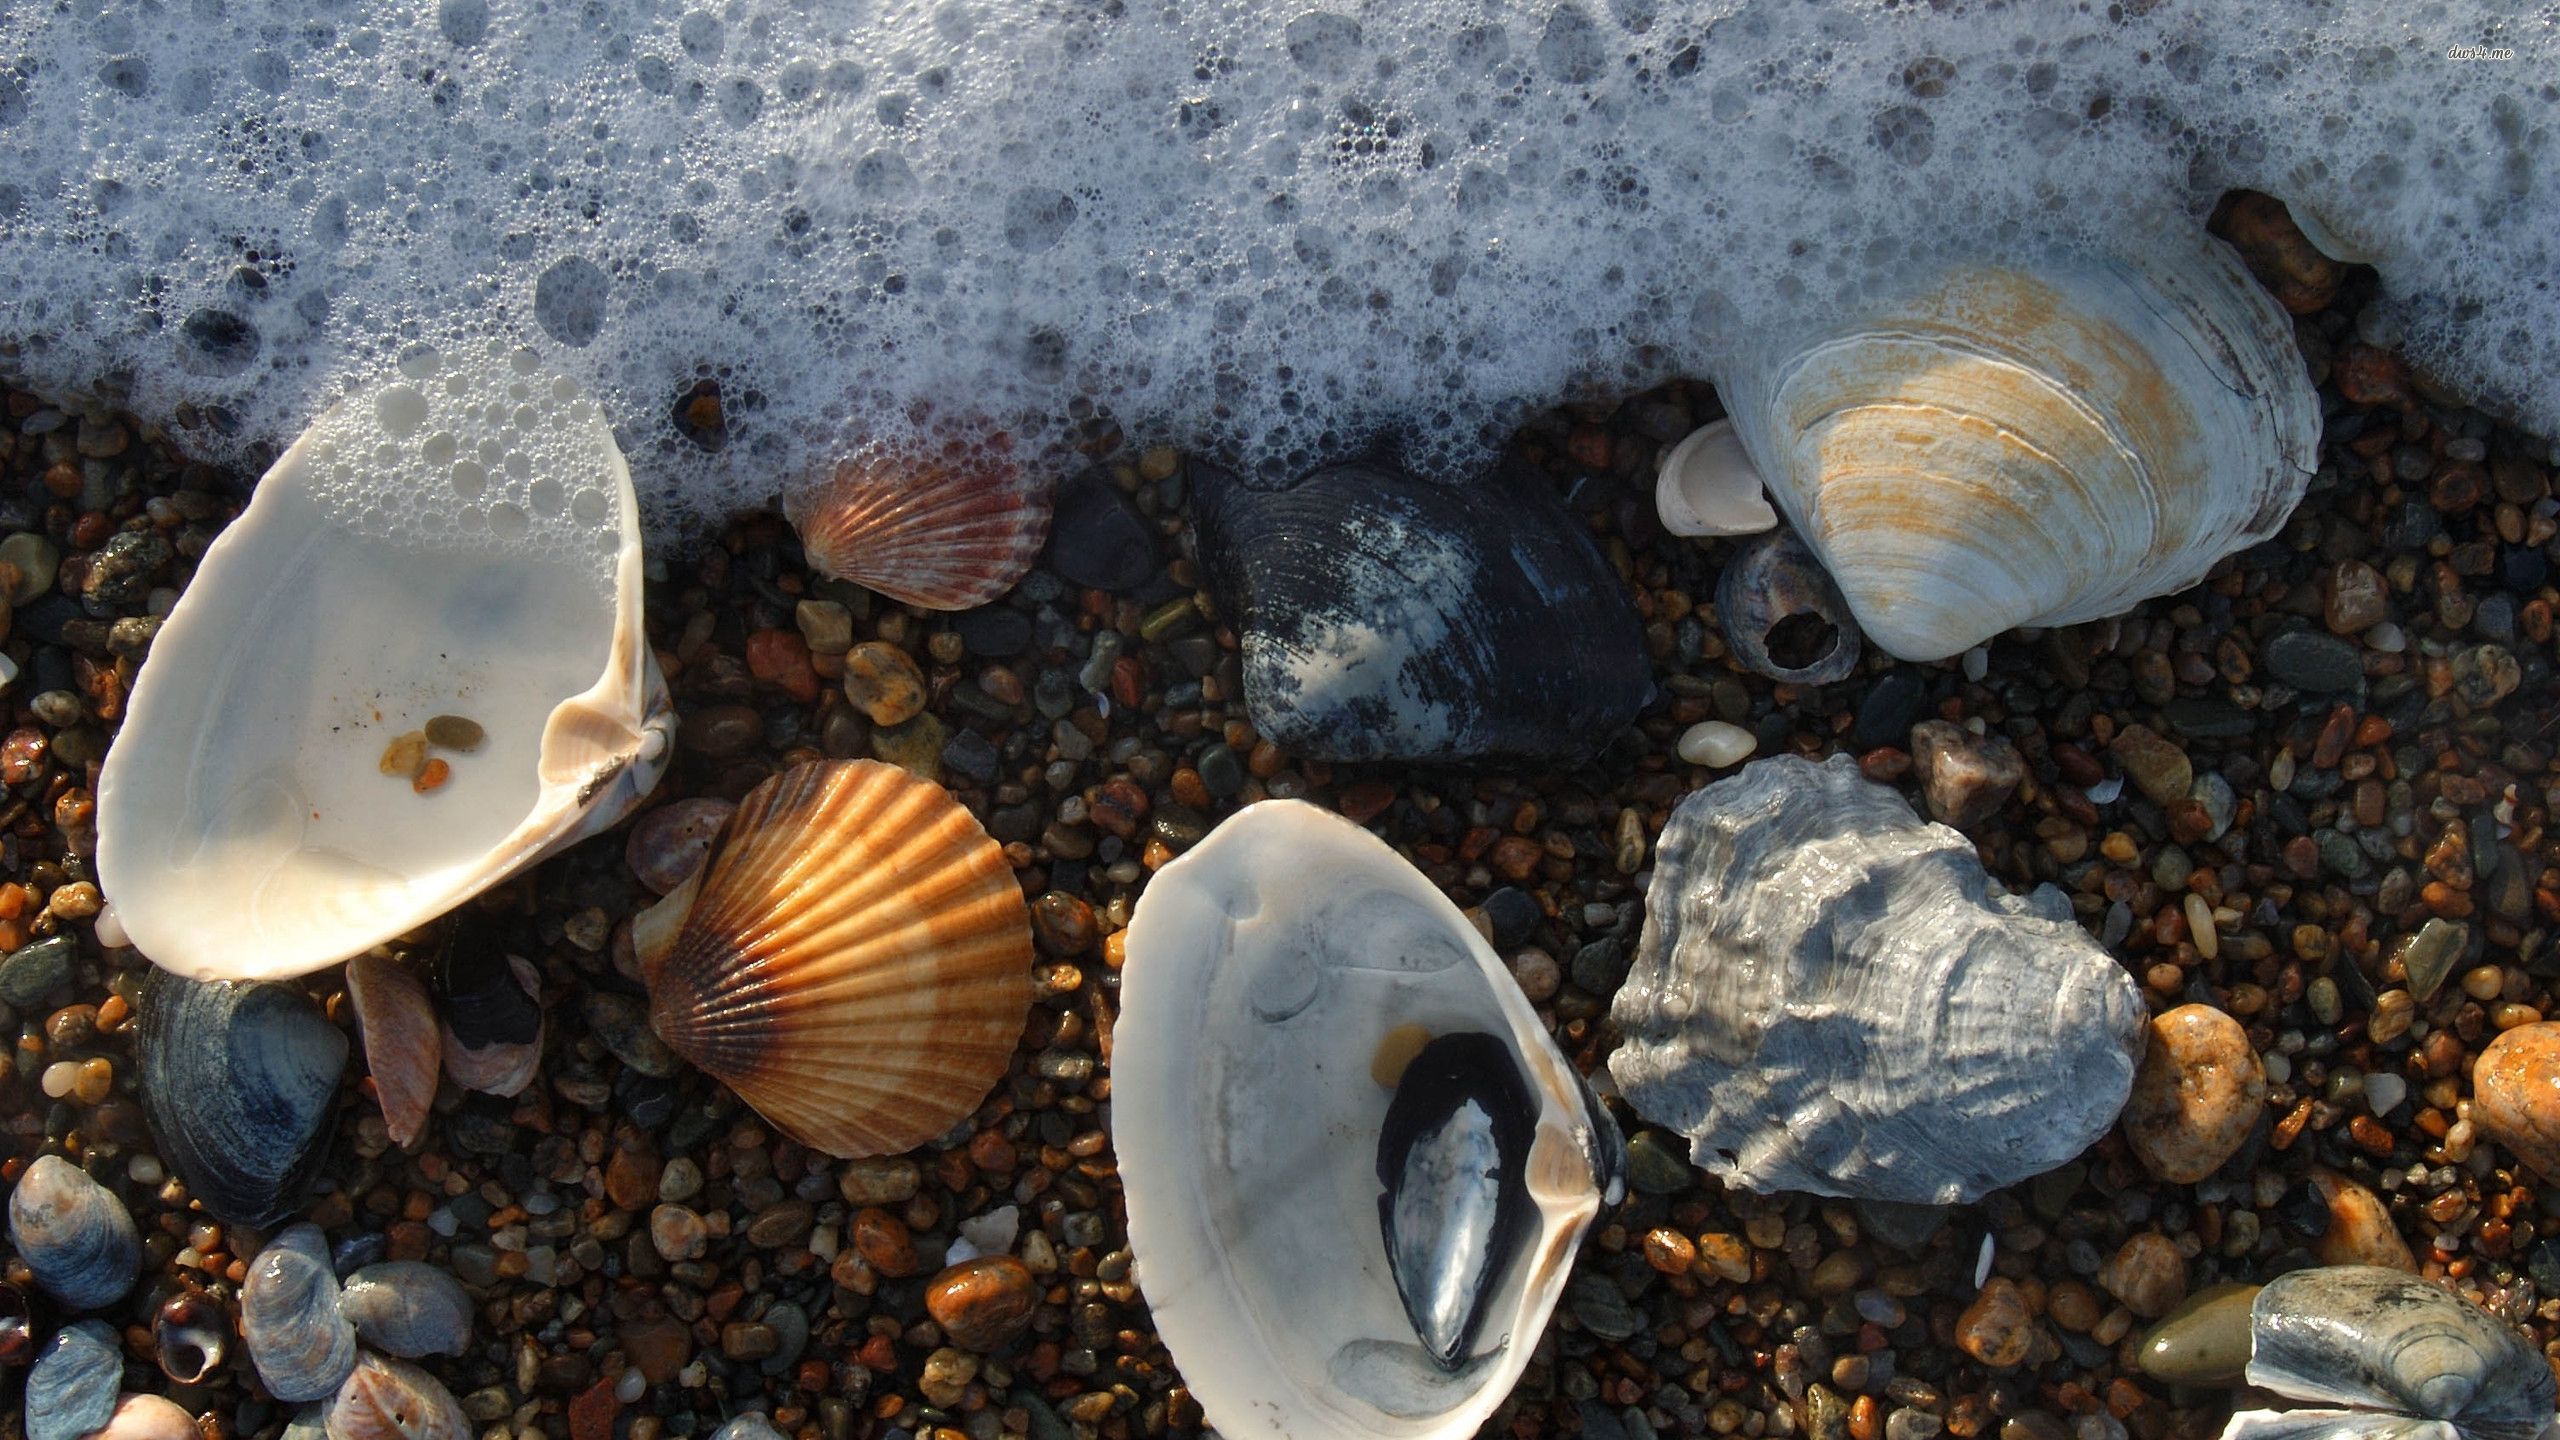 Seashells Wallpaper